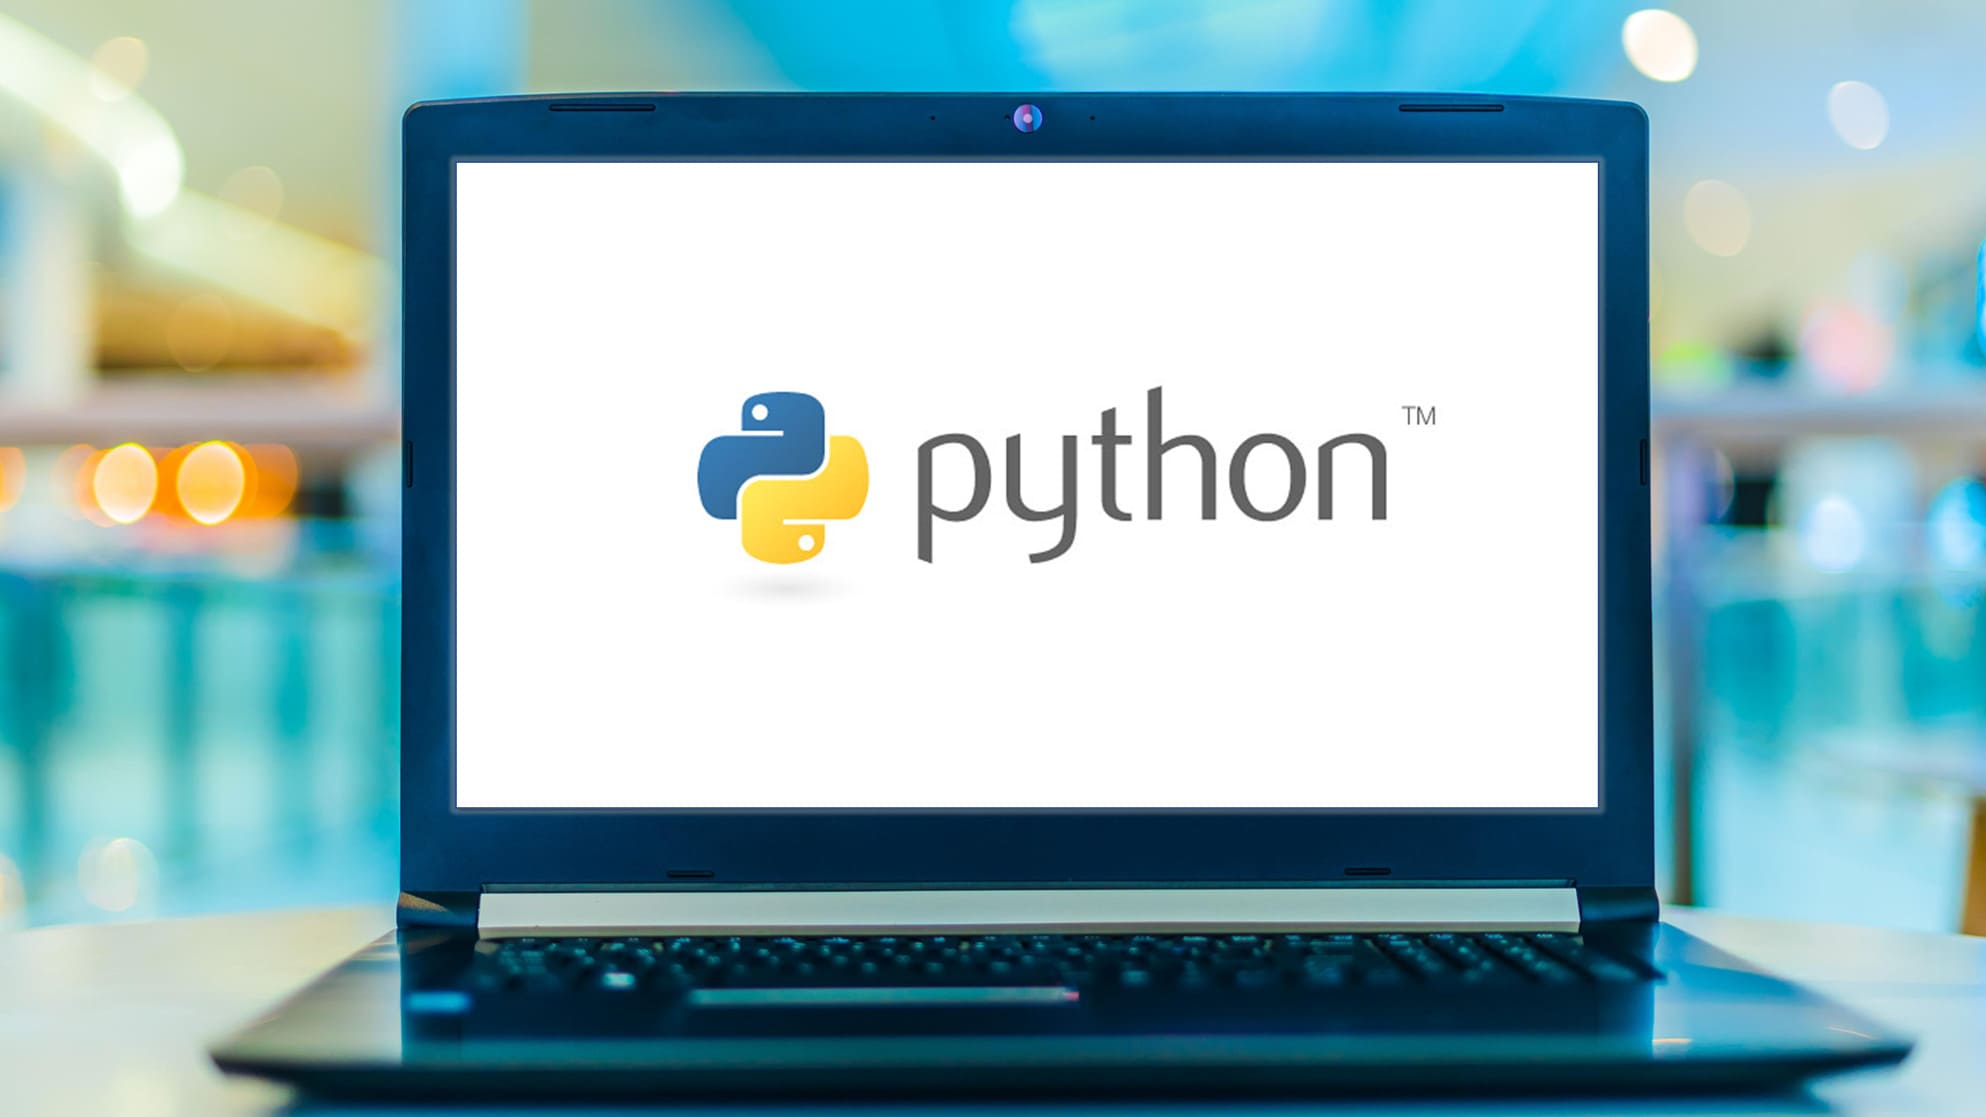 python web development